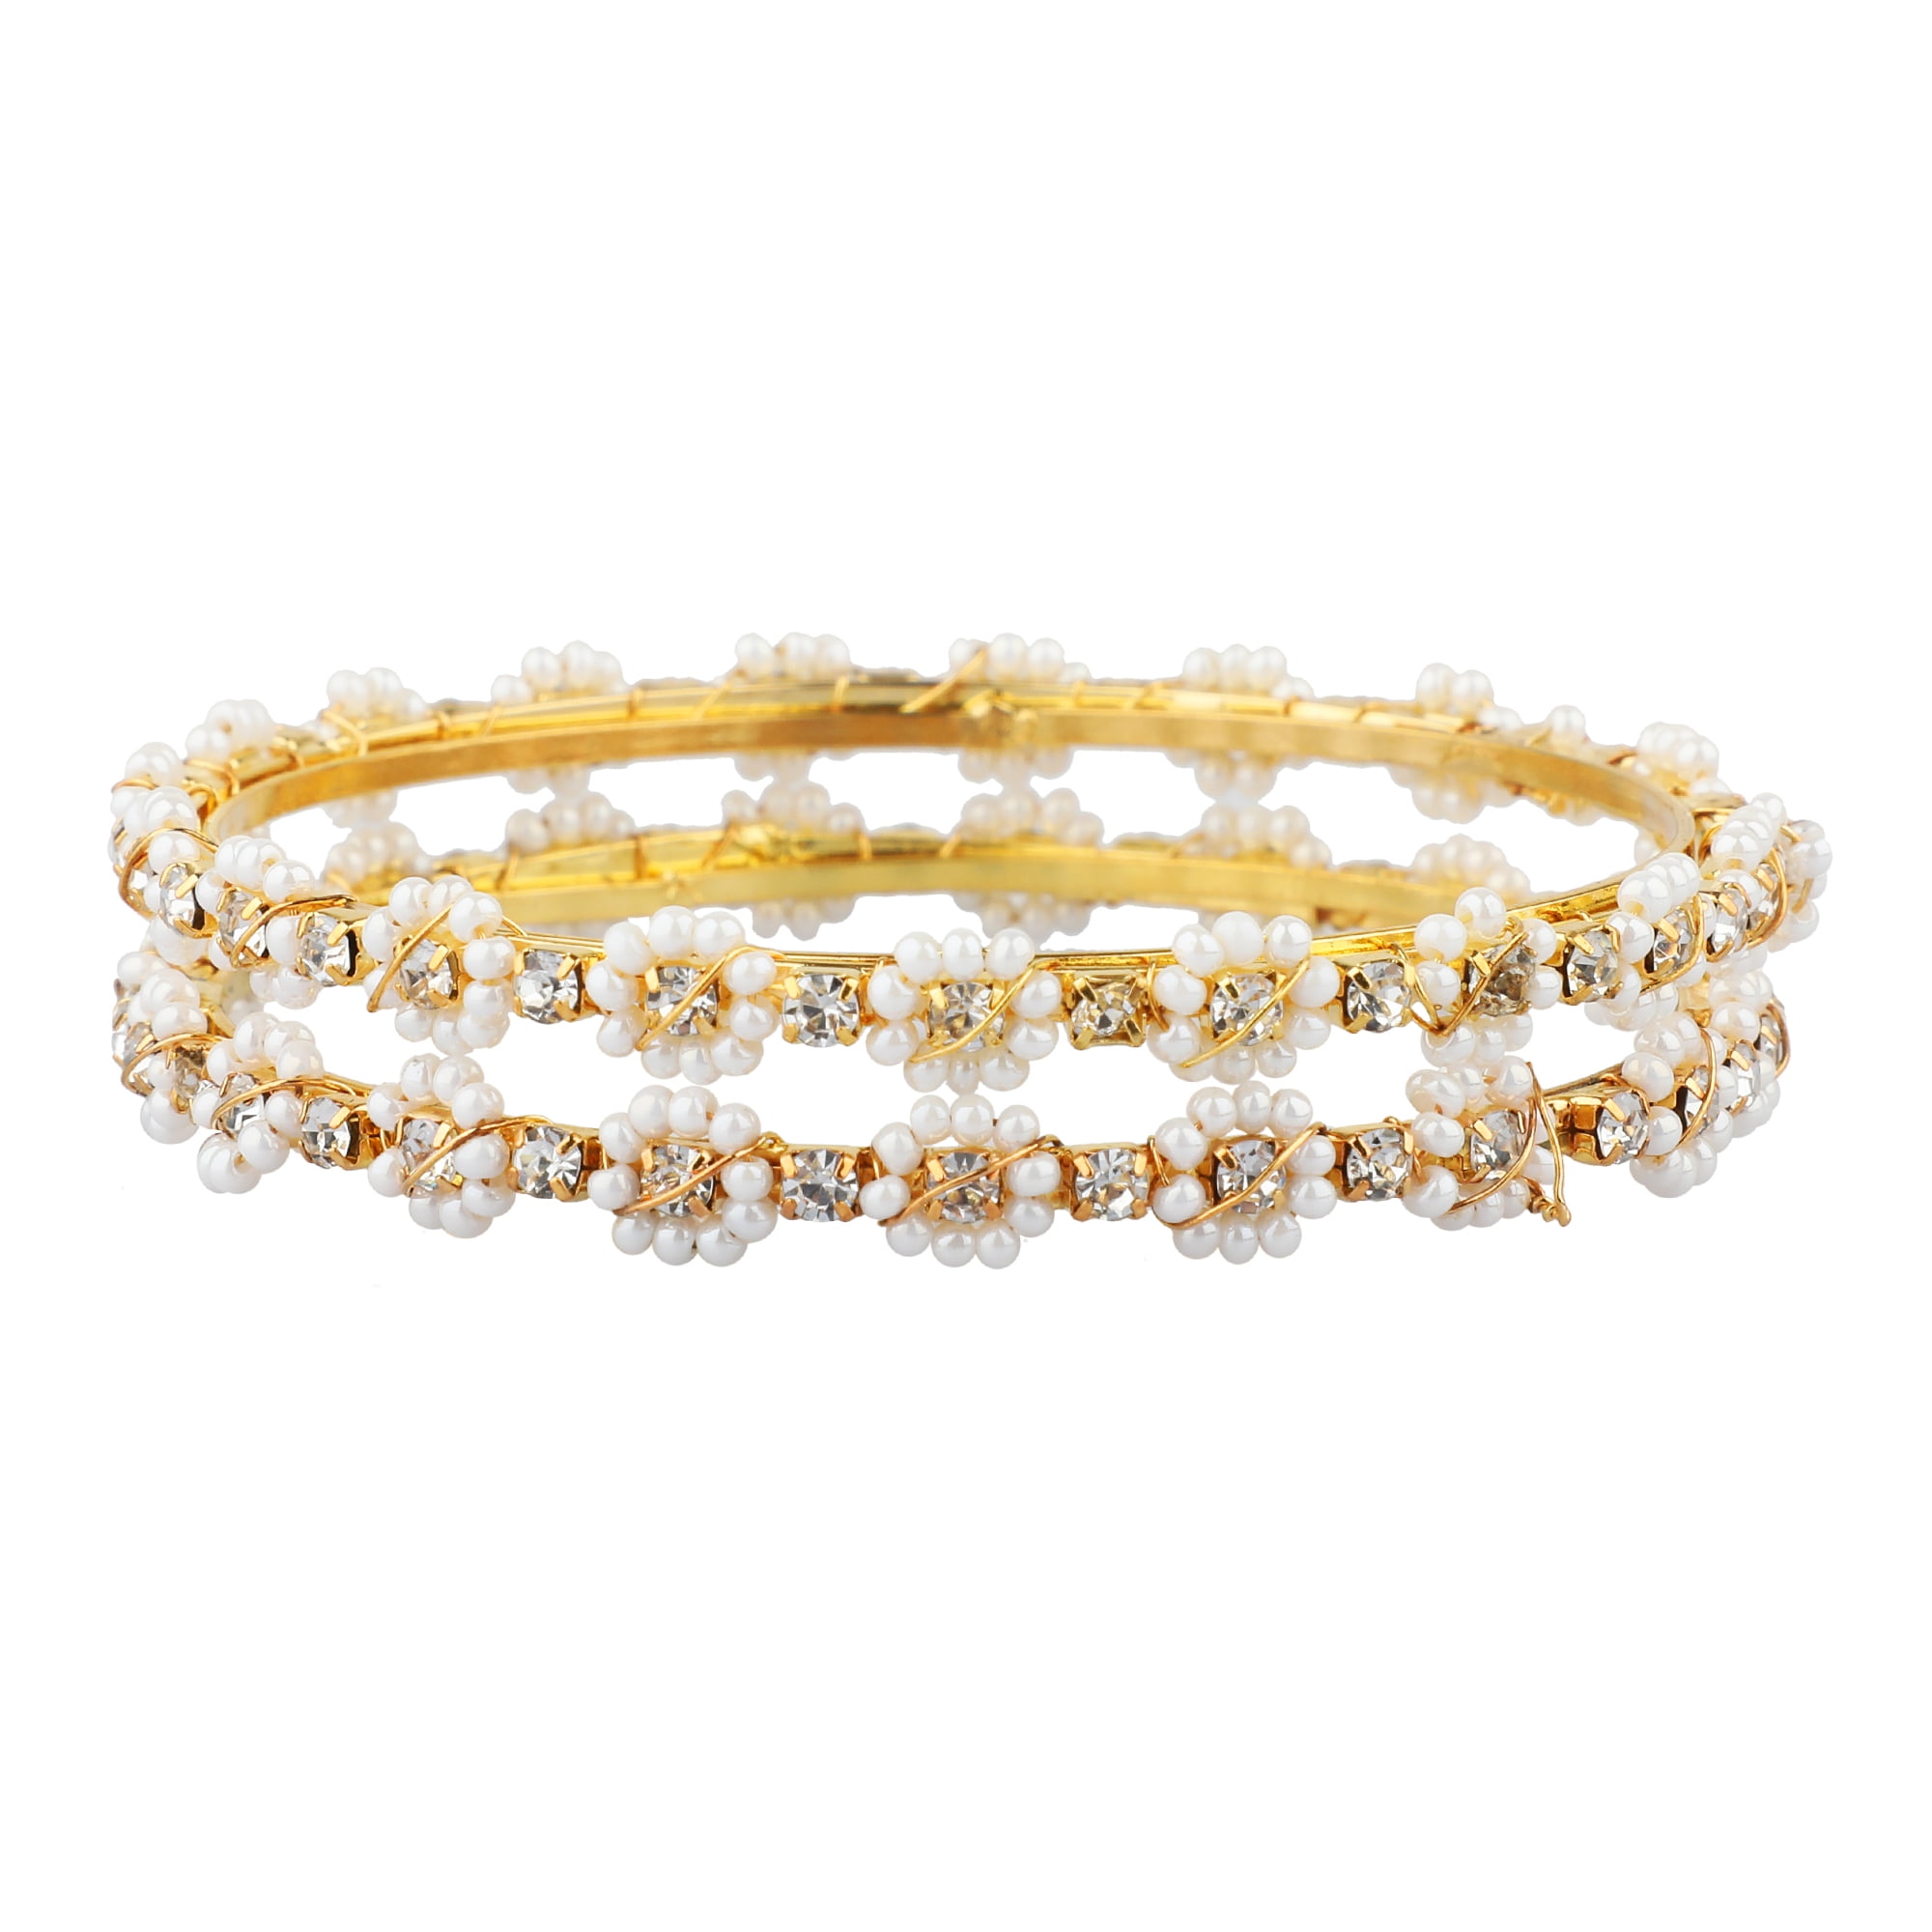 Dubai Gold Color Bracelet | Nigerian Chain Women | Chain Cuff Bangle |  Moroccan Jewelry - Bangles - Aliexpress